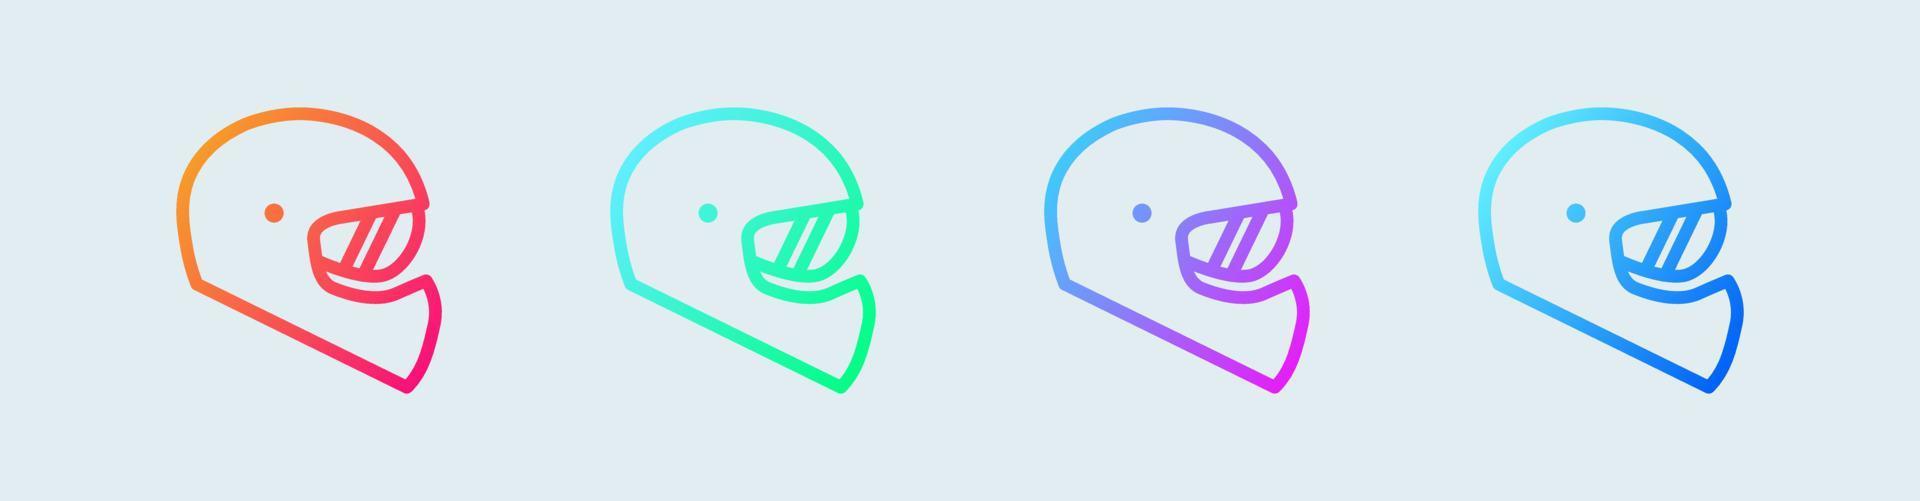 Helmet line icon in gradient colors. Automotive signs vector illustration.